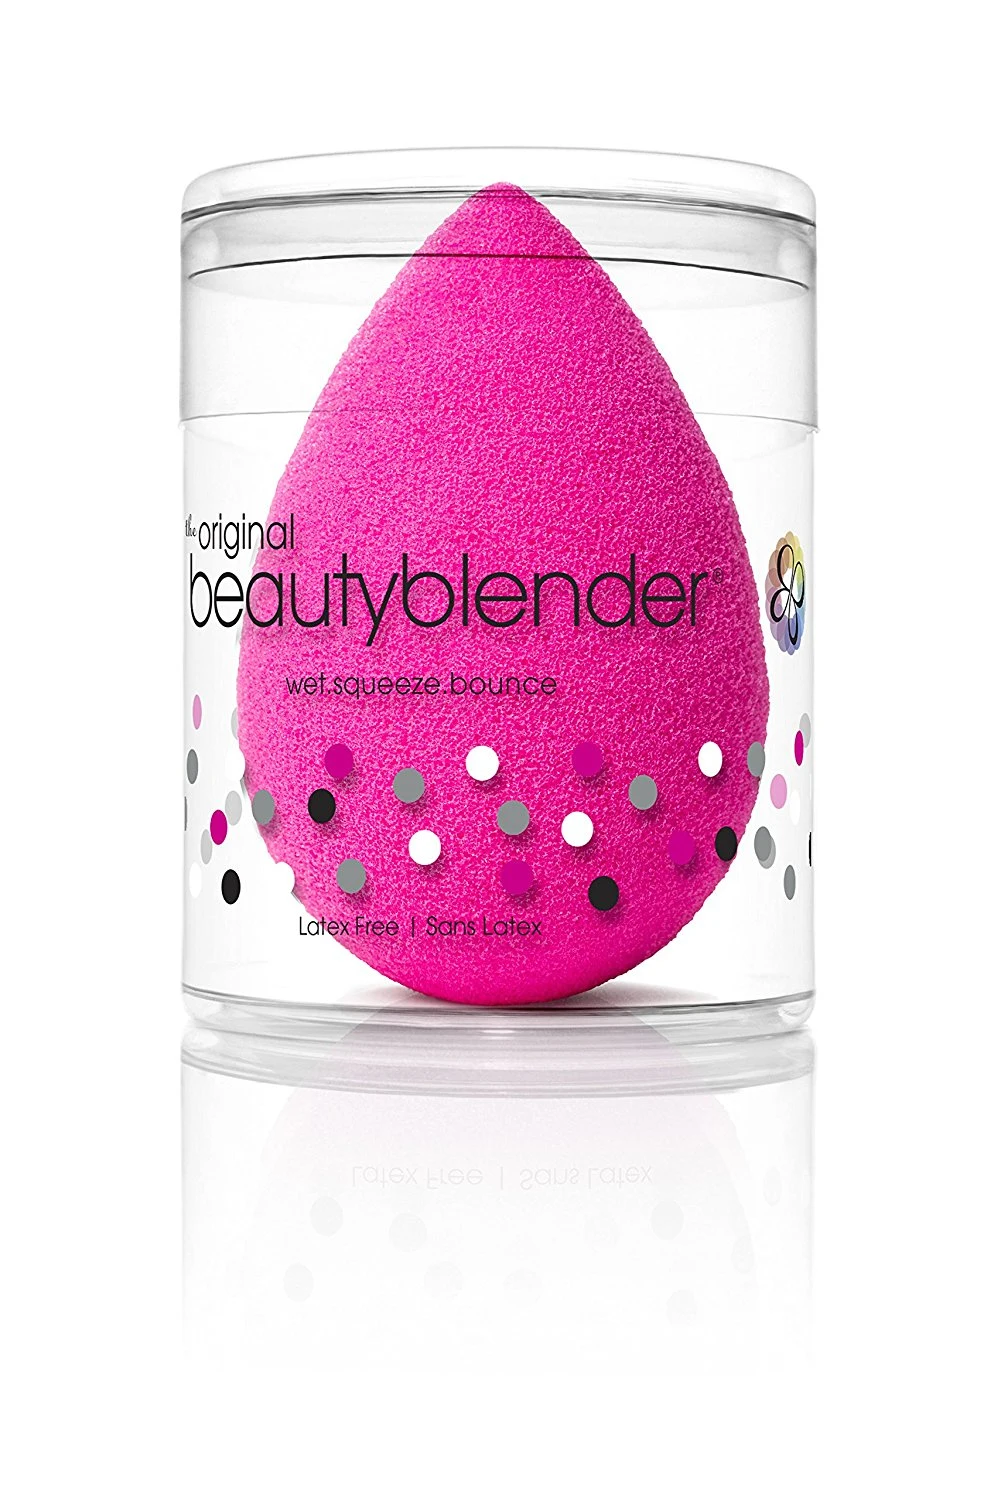 Cosmetics Beauty Blenders Makeup Powder Sponge for Skin Care